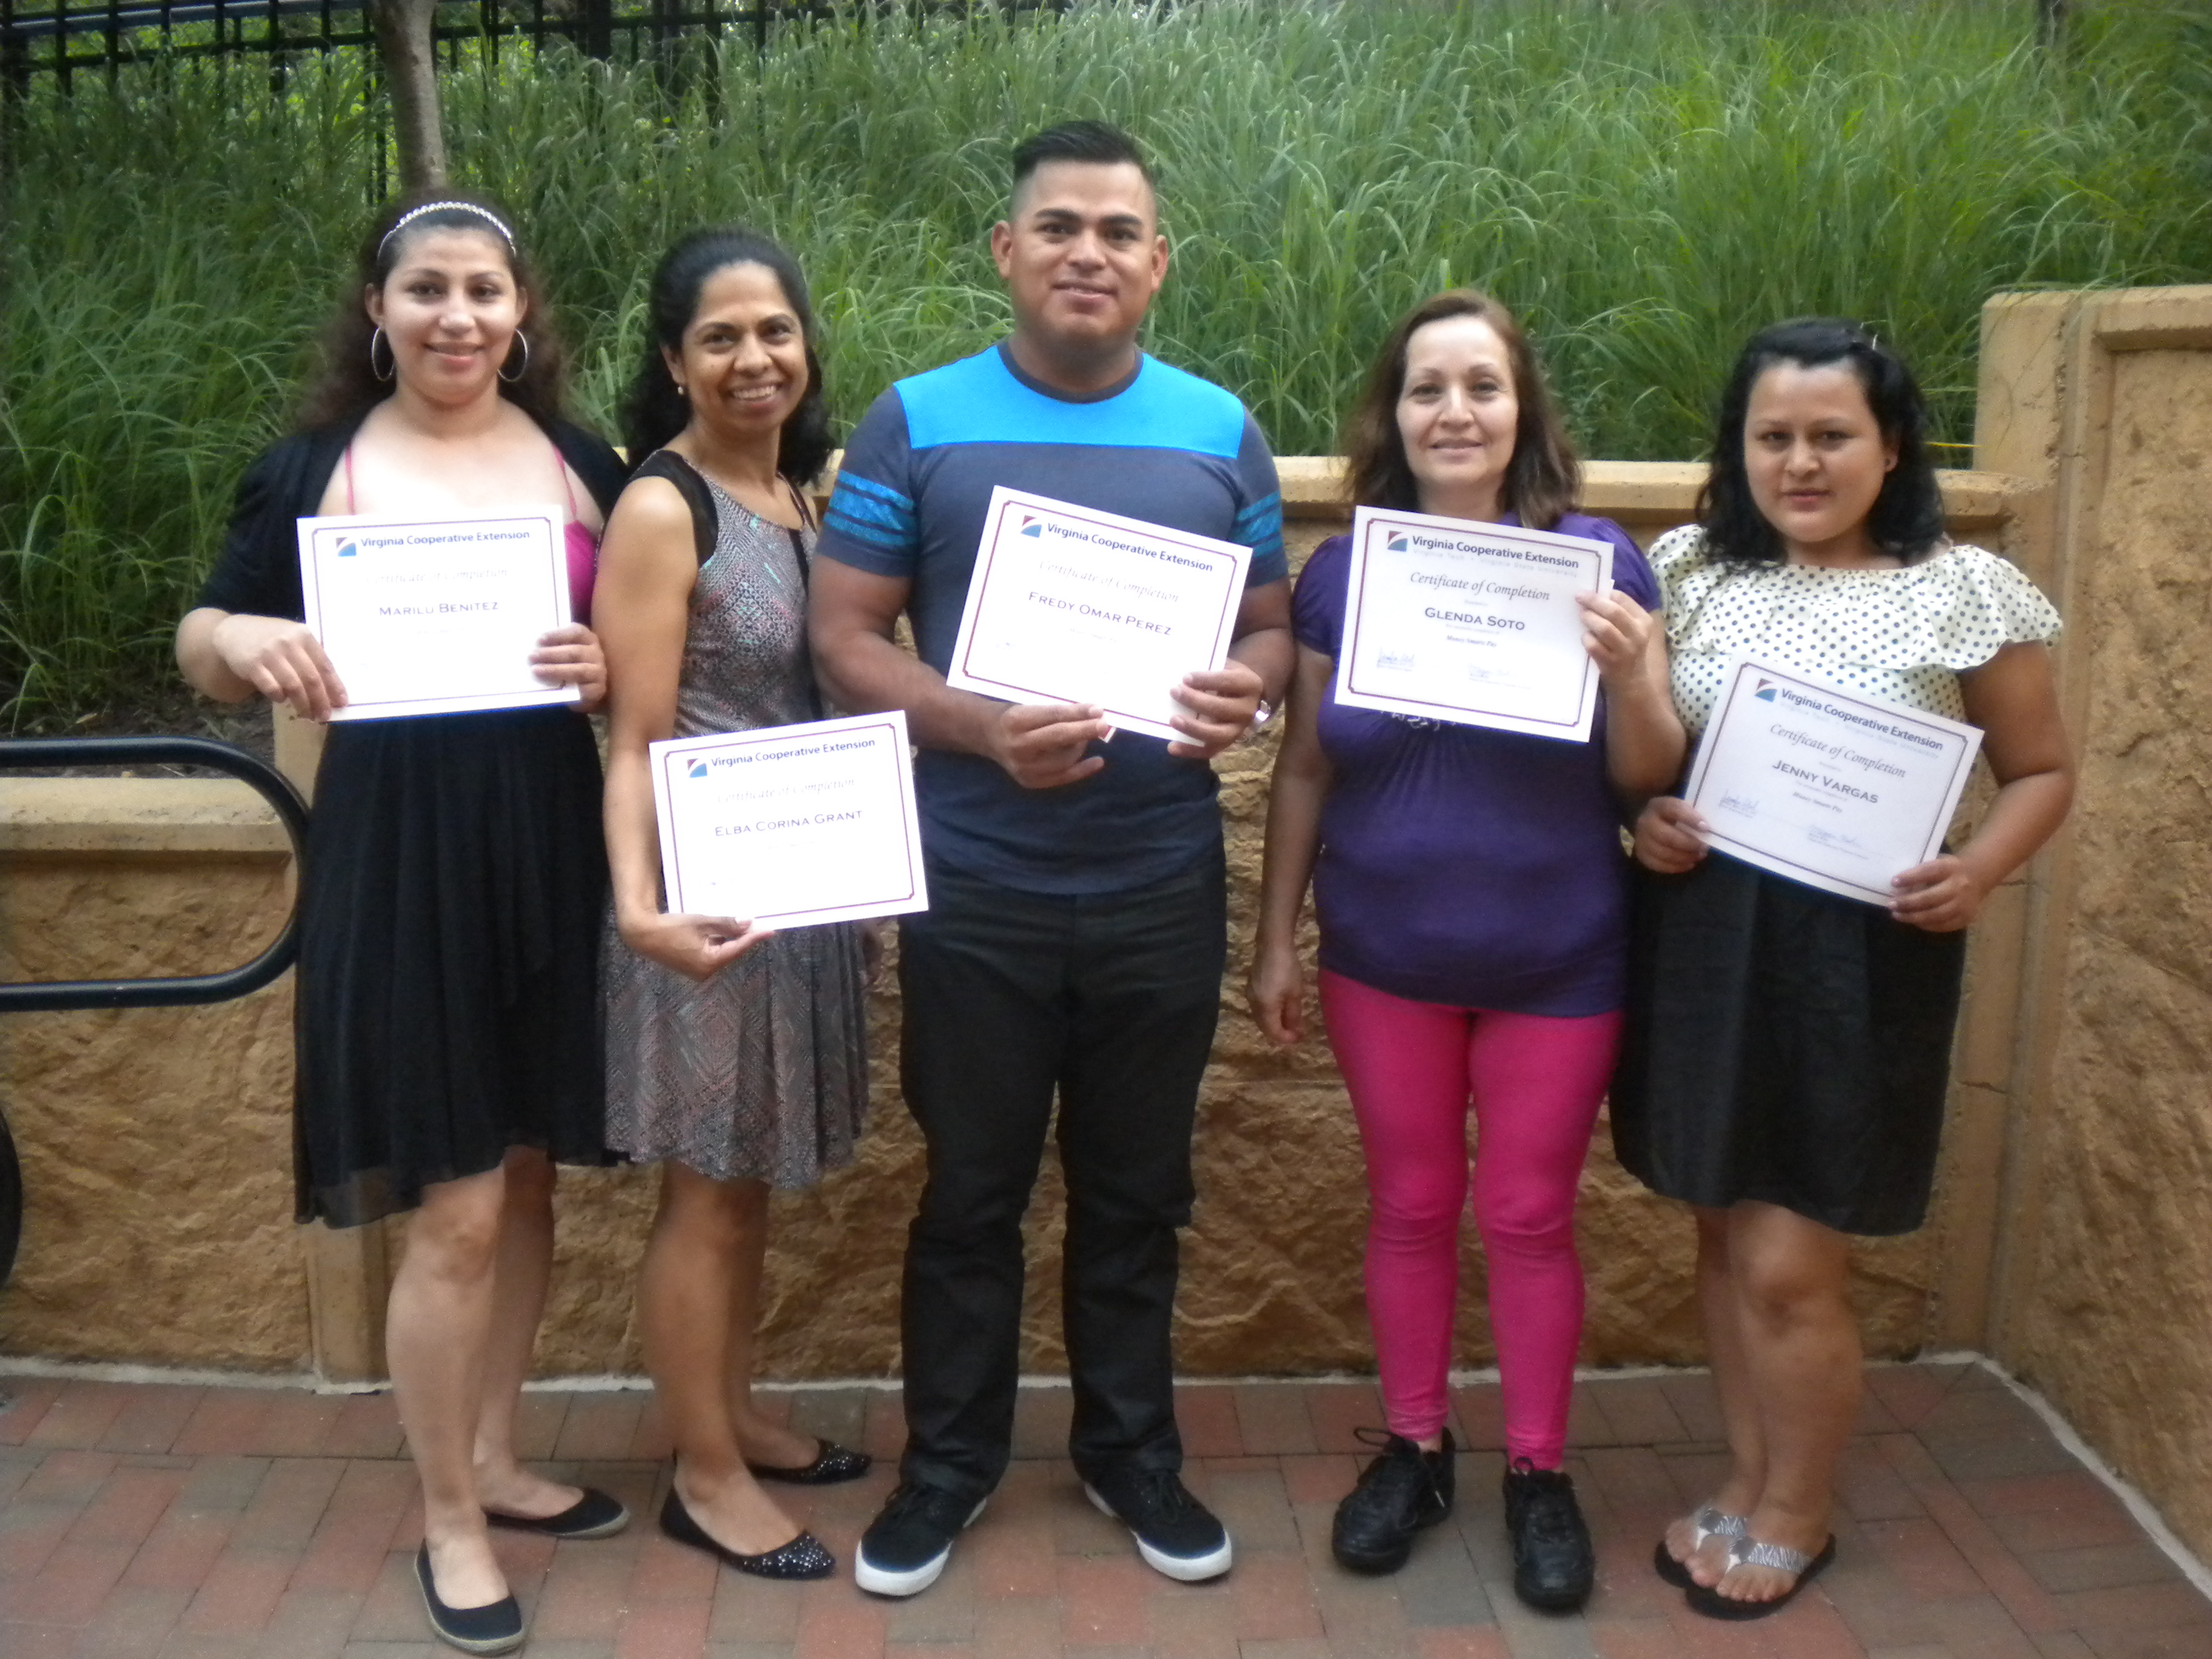 Buchanan Gardens residents Marilu, Corina, Freddy, Glenda, and Jenny display their graduation certificates from the Money Smarts Pay program.